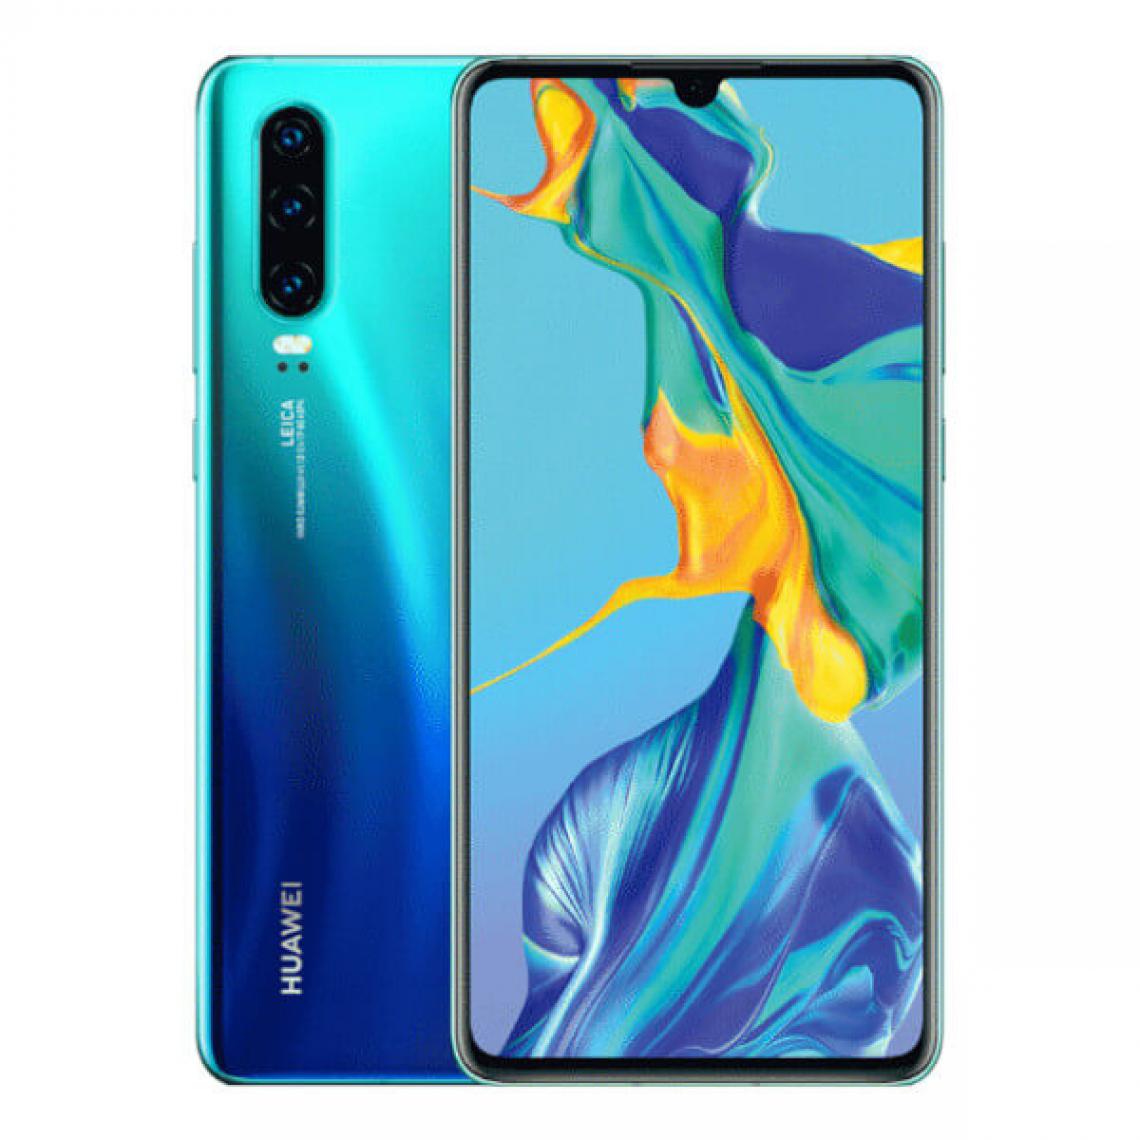 Huawei - Huawei P30 6Go/128Go Bleu (Aurora Blue) Single SIM - Smartphone Android